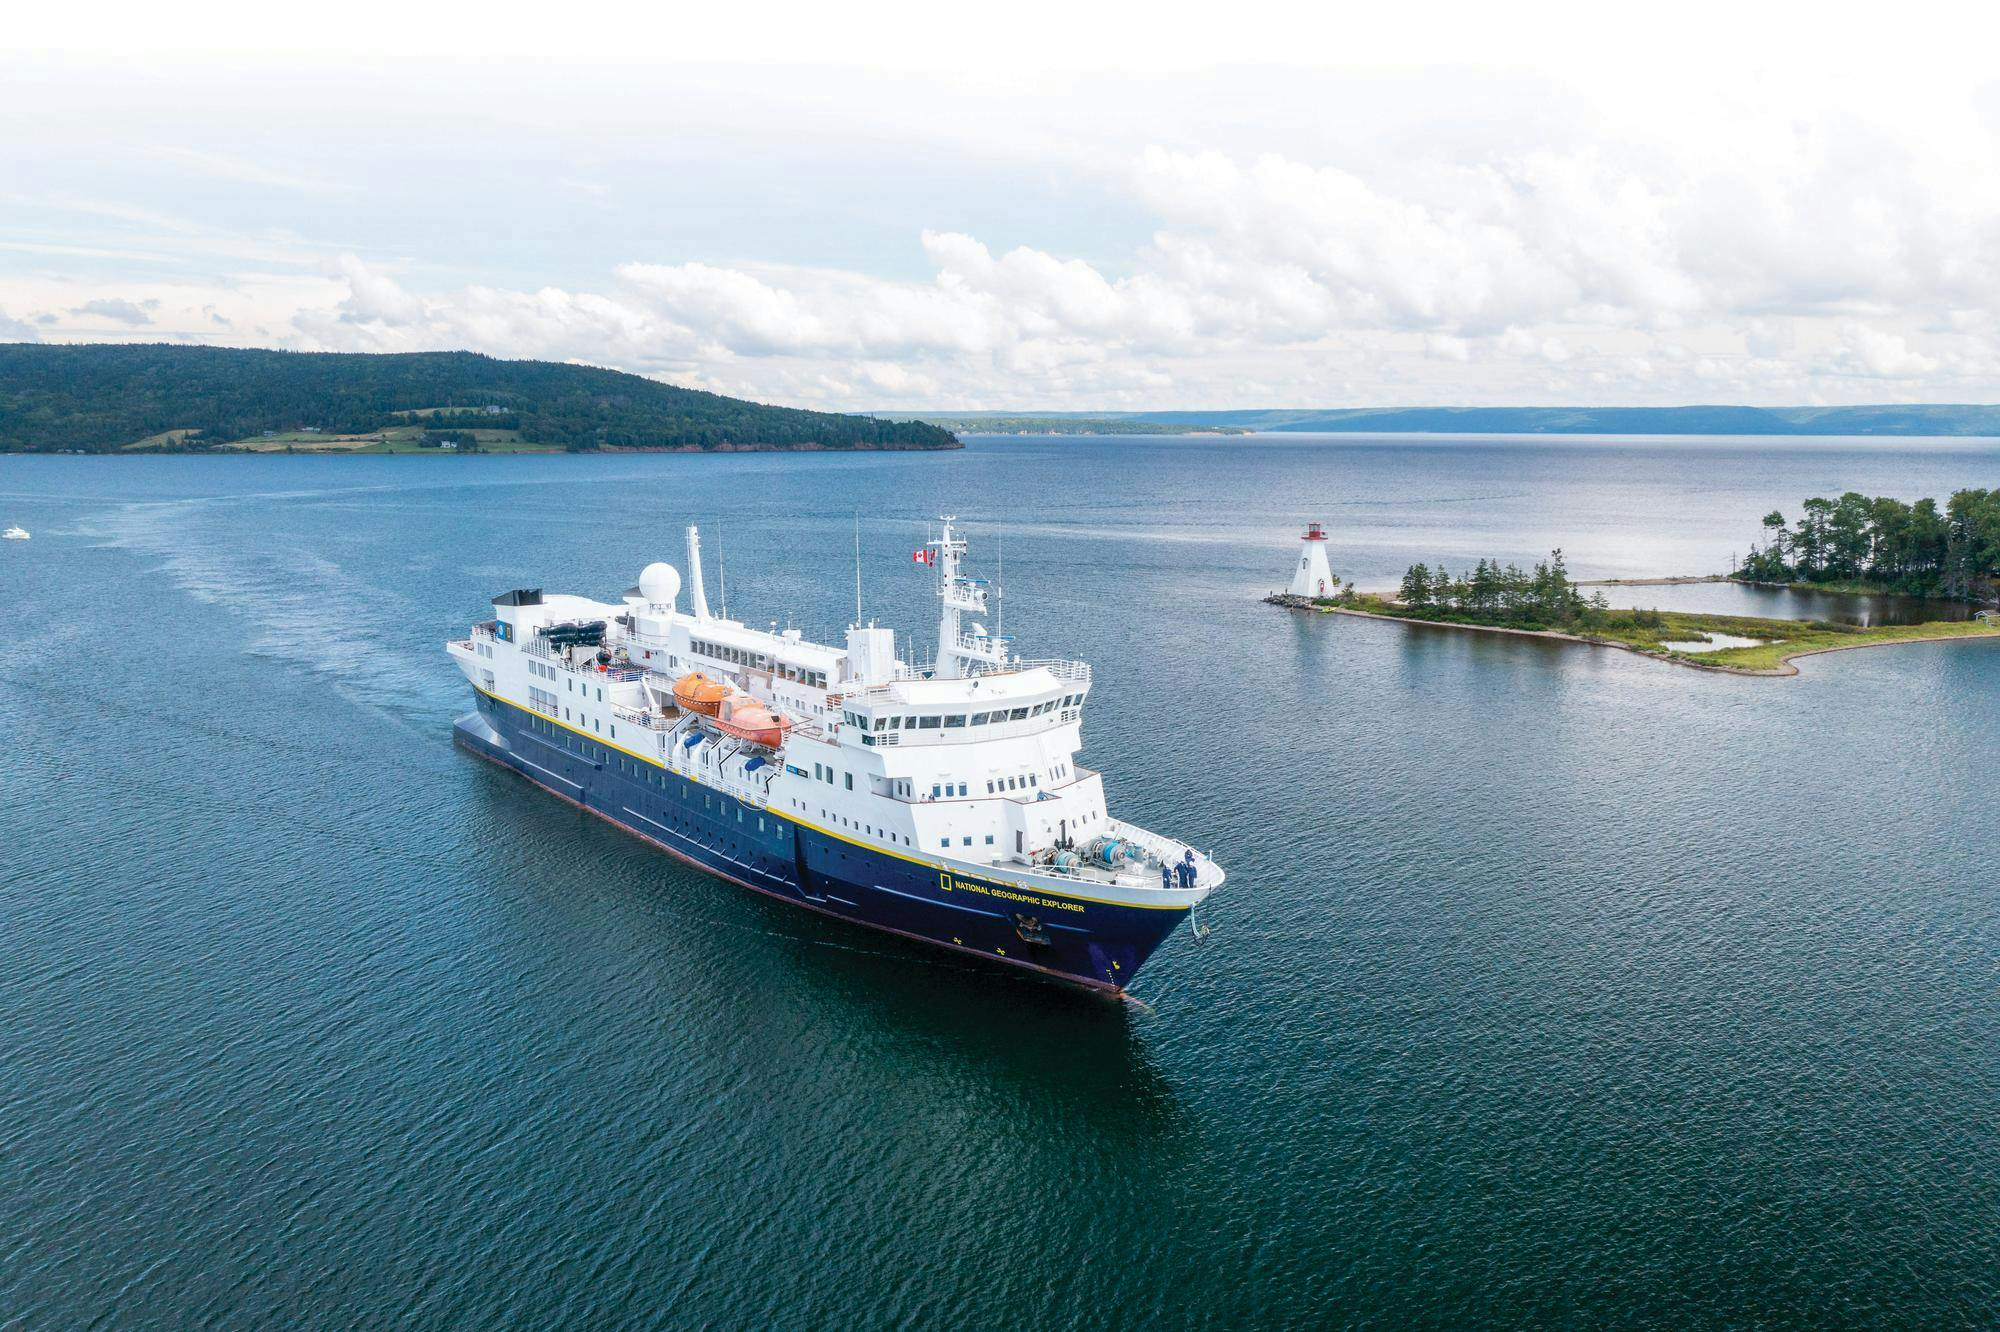 The ship National Geographic Explorer in Baddeck, Nova Scotia, Canada